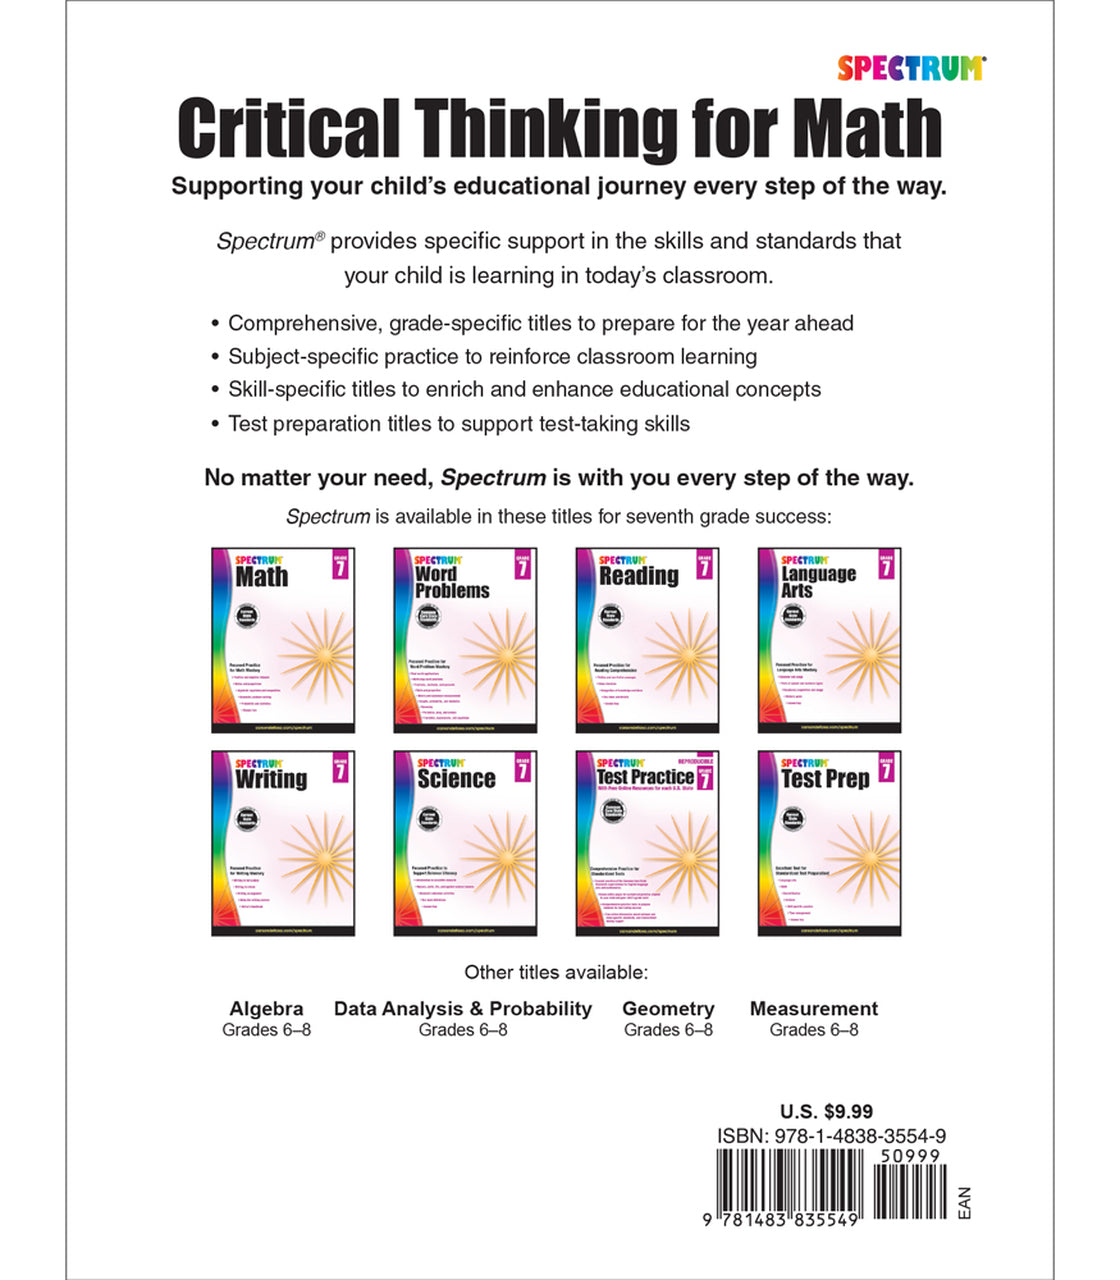 Spectrum Critical Thinking for Math Grade 7